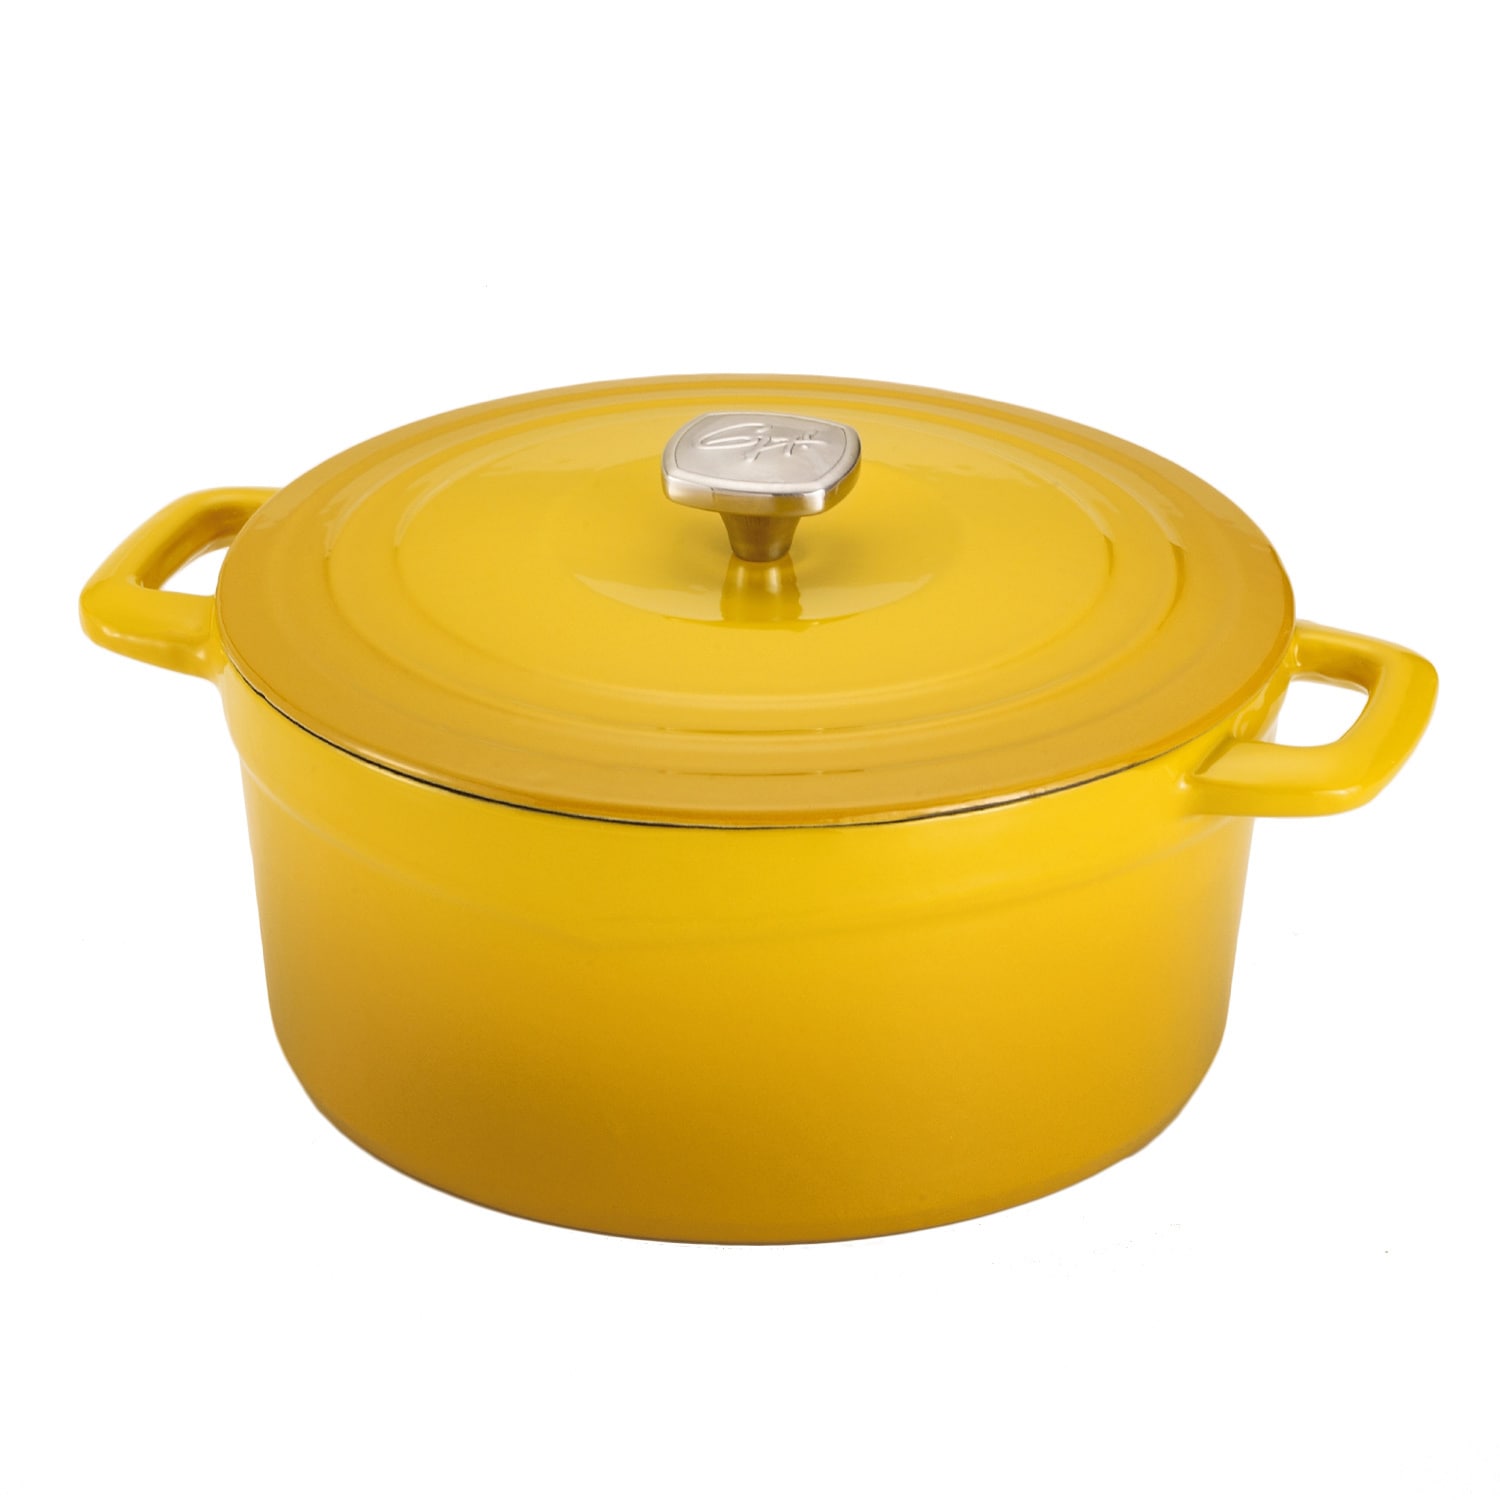 https://ak1.ostkcdn.com/images/products/8719113/Guy-Fieri-7-quart-Yellow-Porcelain-Cast-Iron-Dutch-Oven-L15967468.jpg